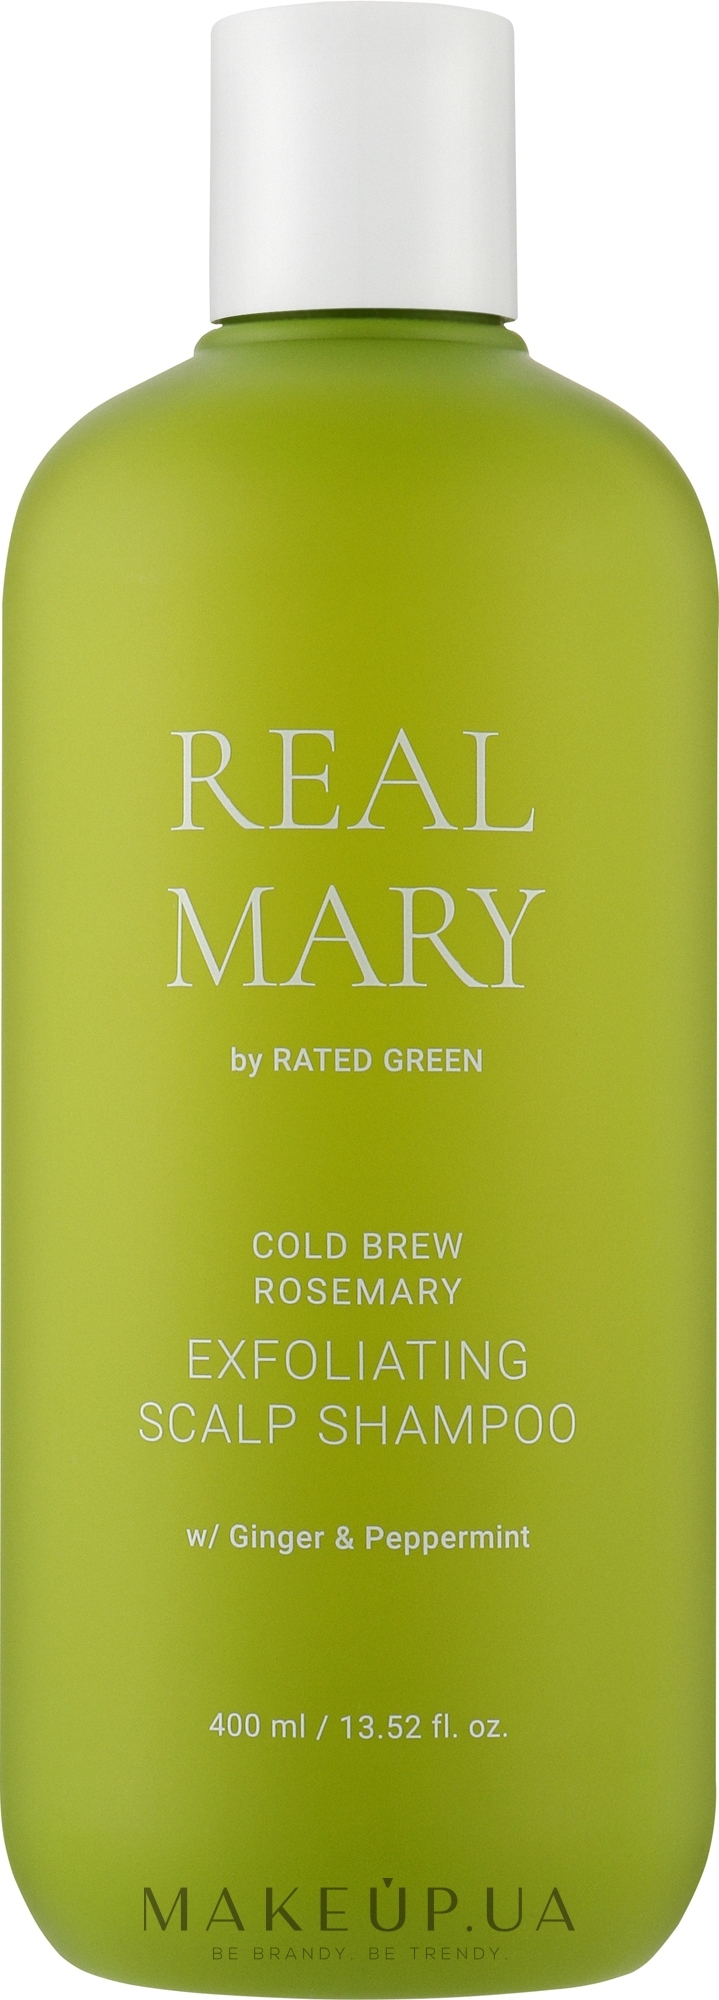 Глубоко очищающий и отшелушивающий шампунь с соком розмарина - Rated Green Real Mary Exfoliating Scalp Shampoo — фото 400ml